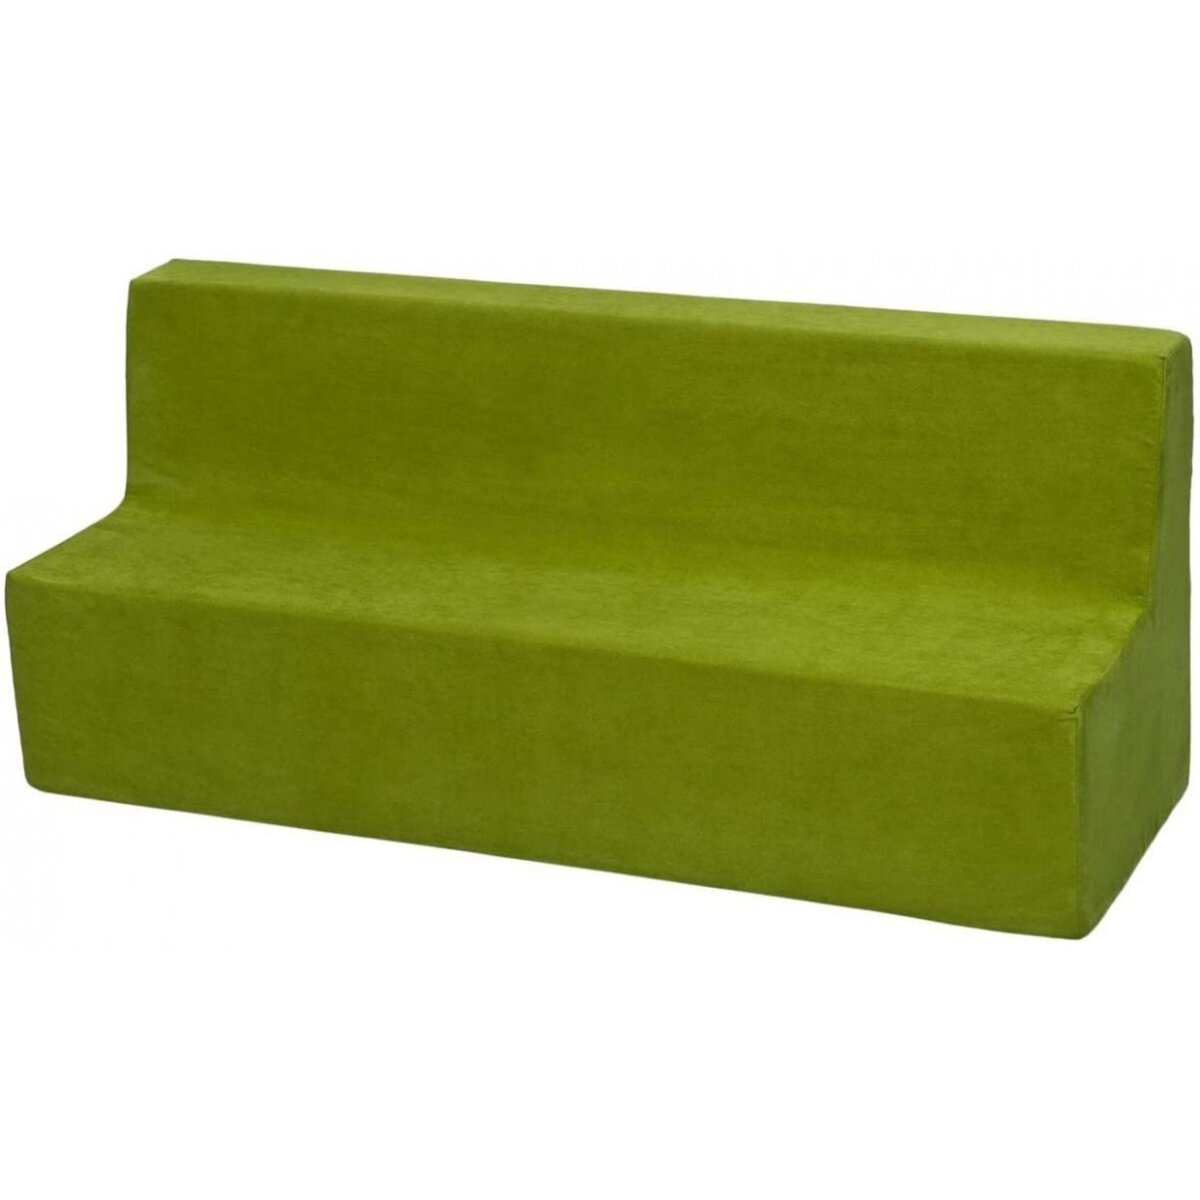  Canapé jeu confort repos vert